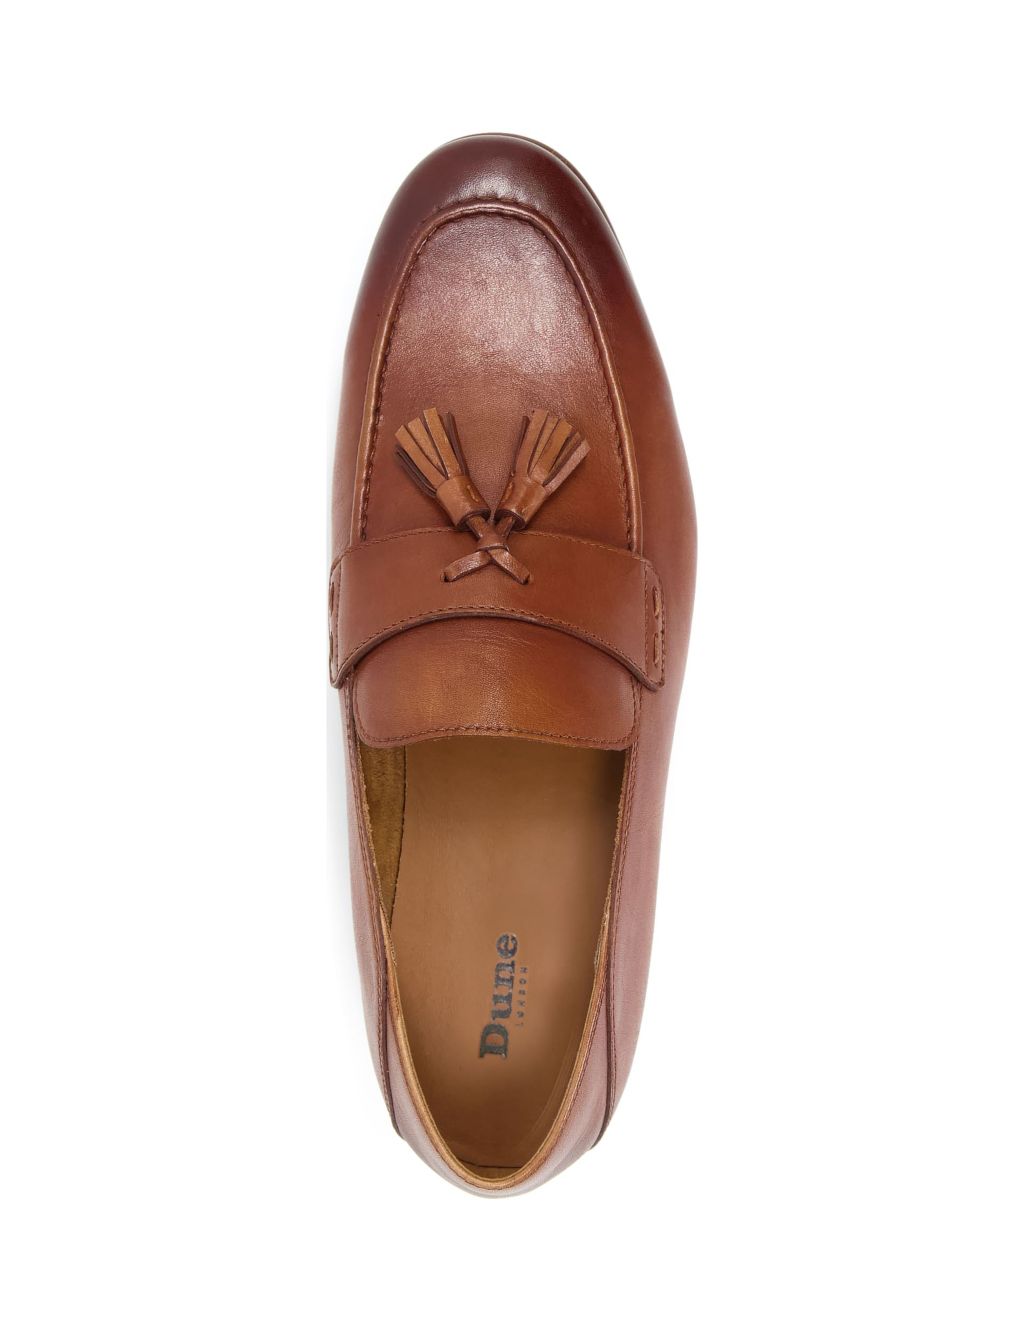 Leather Tassel Loafers image 4